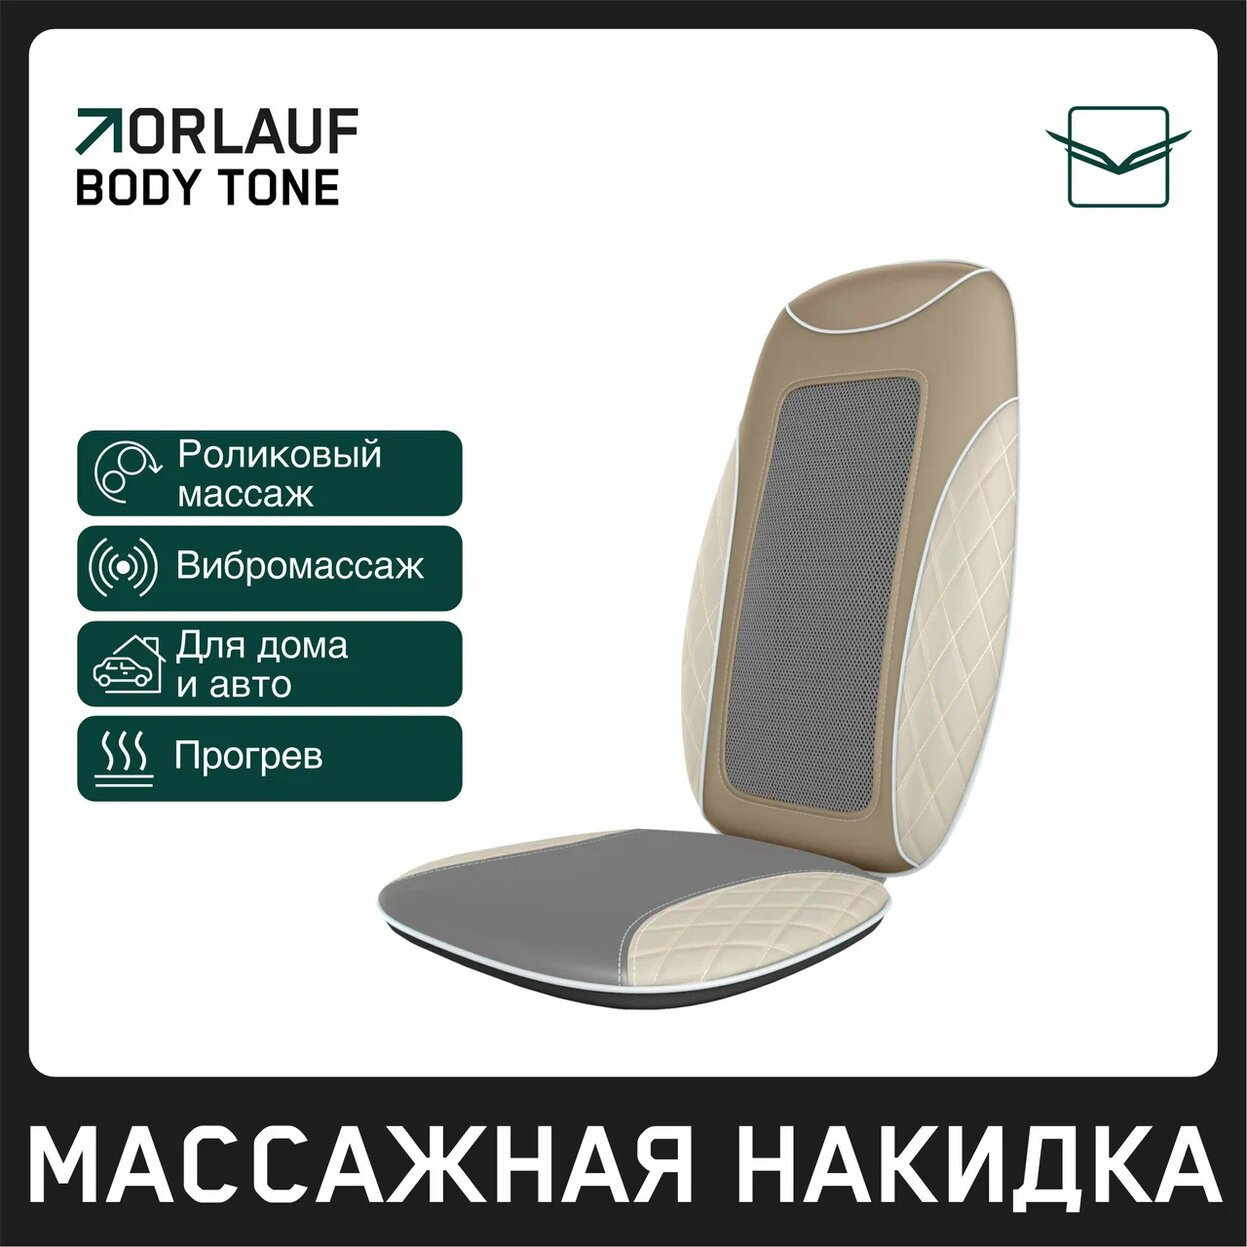 Orlauf Body Tone из каталога устройств для массажа в Самаре по цене 15400 ₽